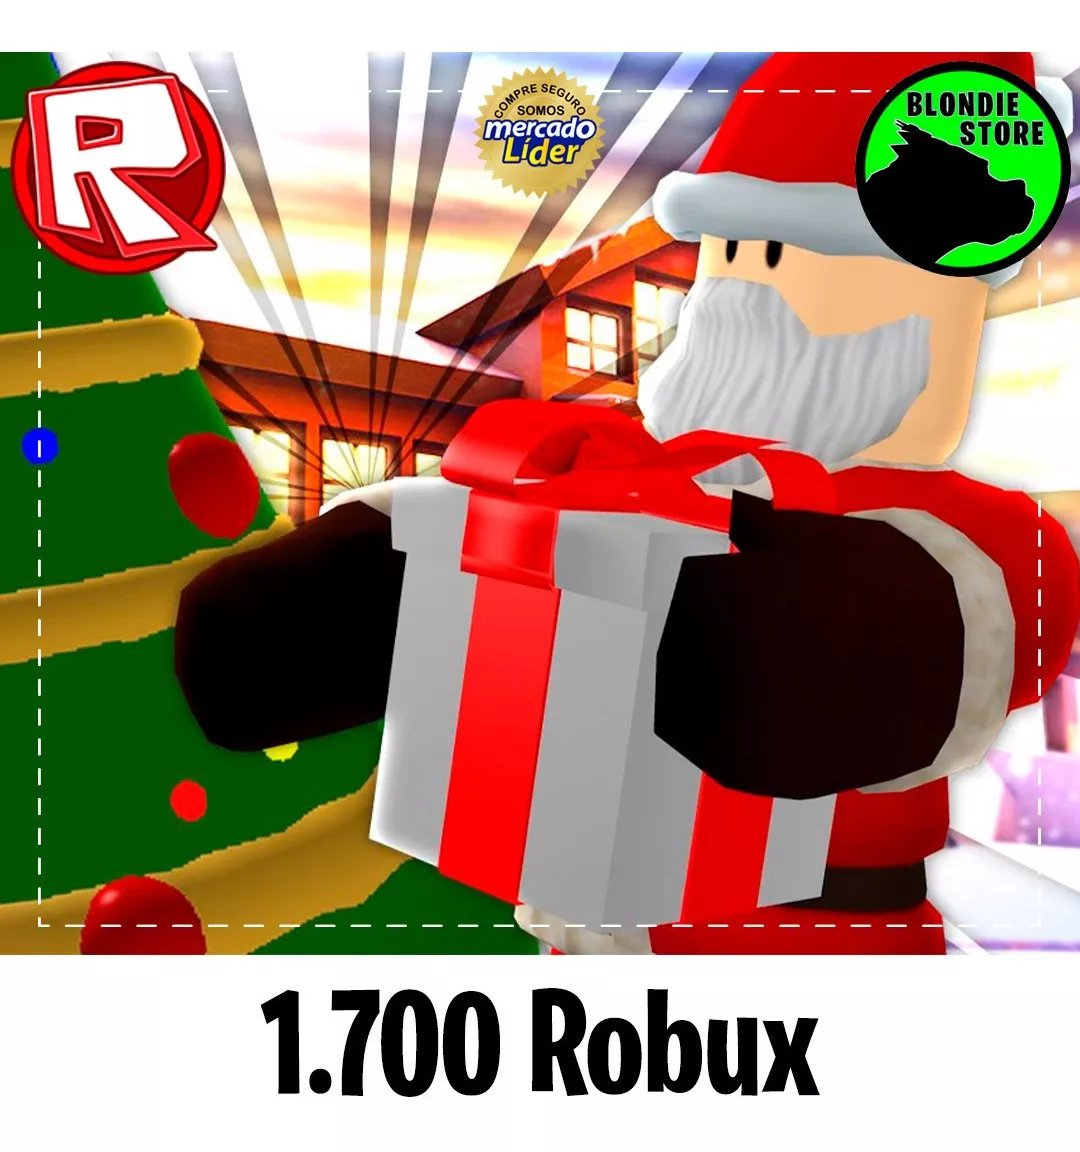 Event Robux Roblox Tomwhite2010 Com - thanos image id roblox hack robux 1m